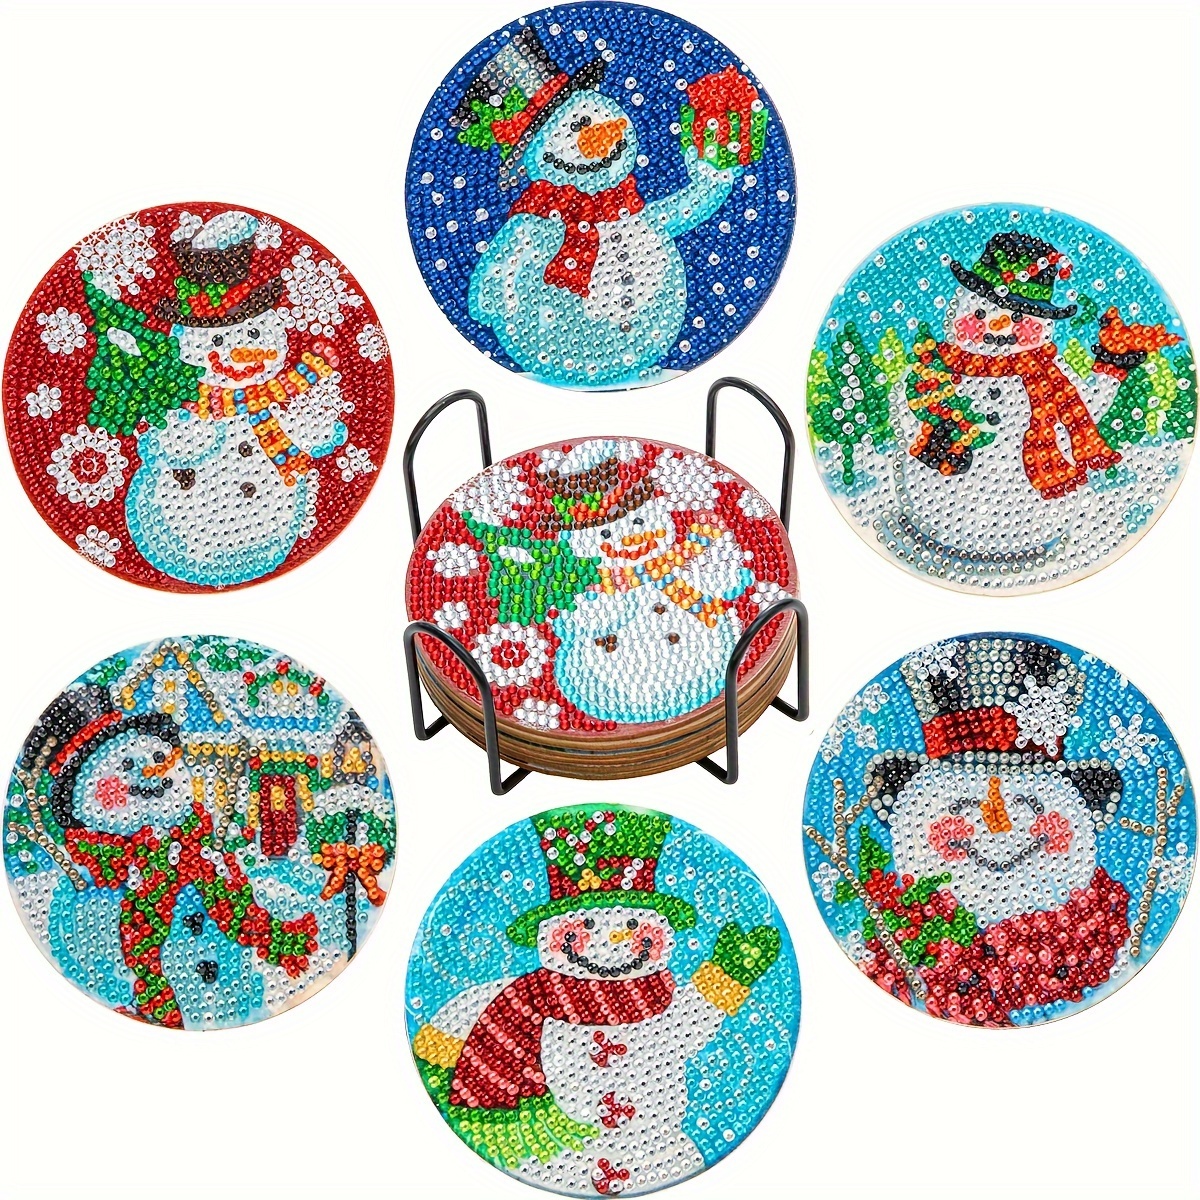 

6-piece Snowman Diamond Art Coaster Set With Holder - Diy Round Diamond Painting Craft Kit For Beginners, Wooden Craft Supplies